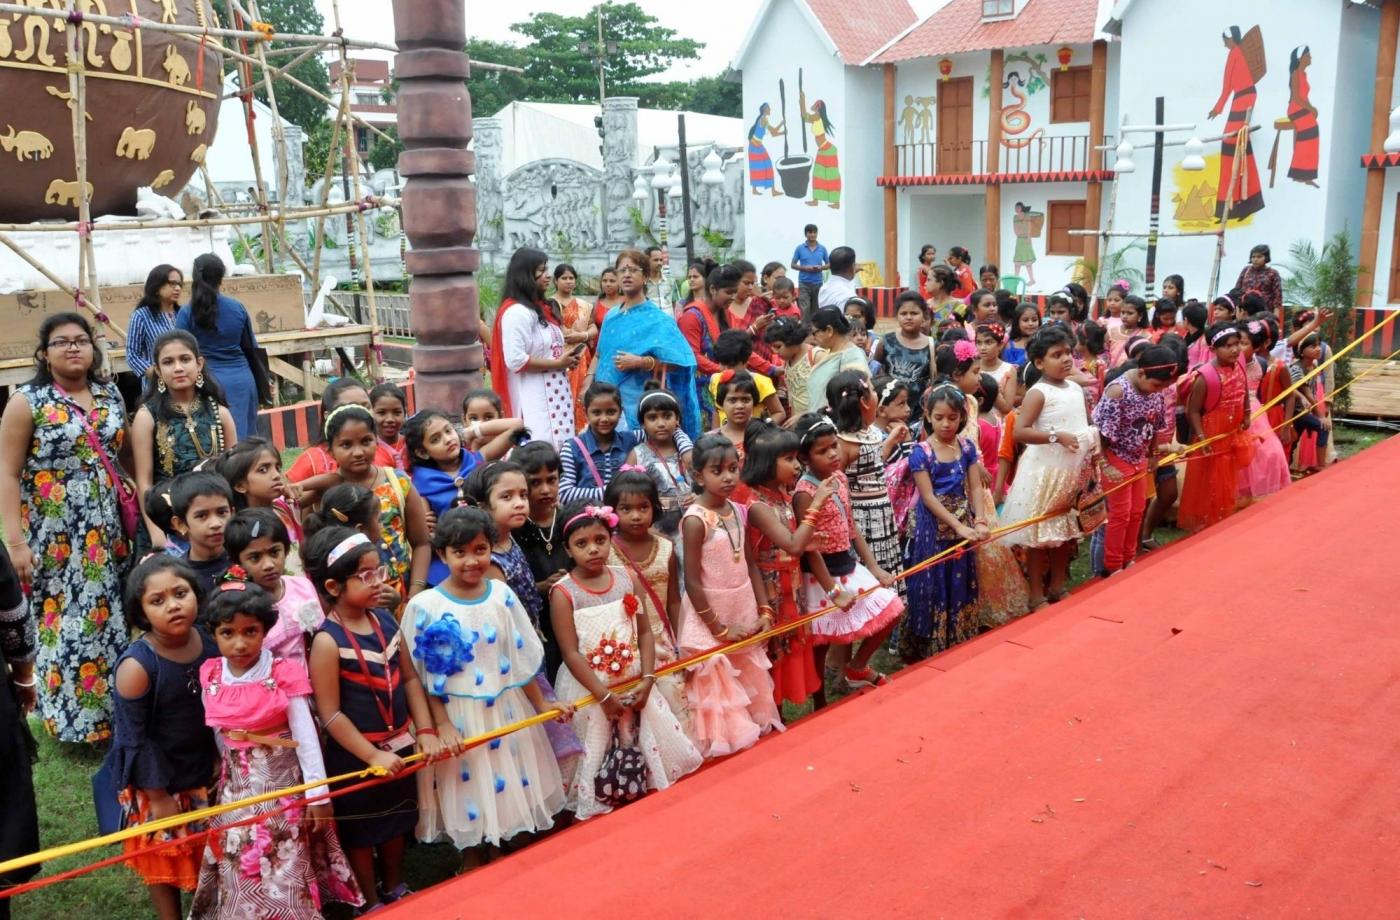 Kolkata: Children visit a puja pandal during Durga Puja celebrations organised by Saltlake BJ block Sarodutsav committee in collaboration with Chinese embassy in Kolkata ahead of the festival, on Oct 13, 2018. (Photo: Kuntal Chakrabarty/IANS) by .